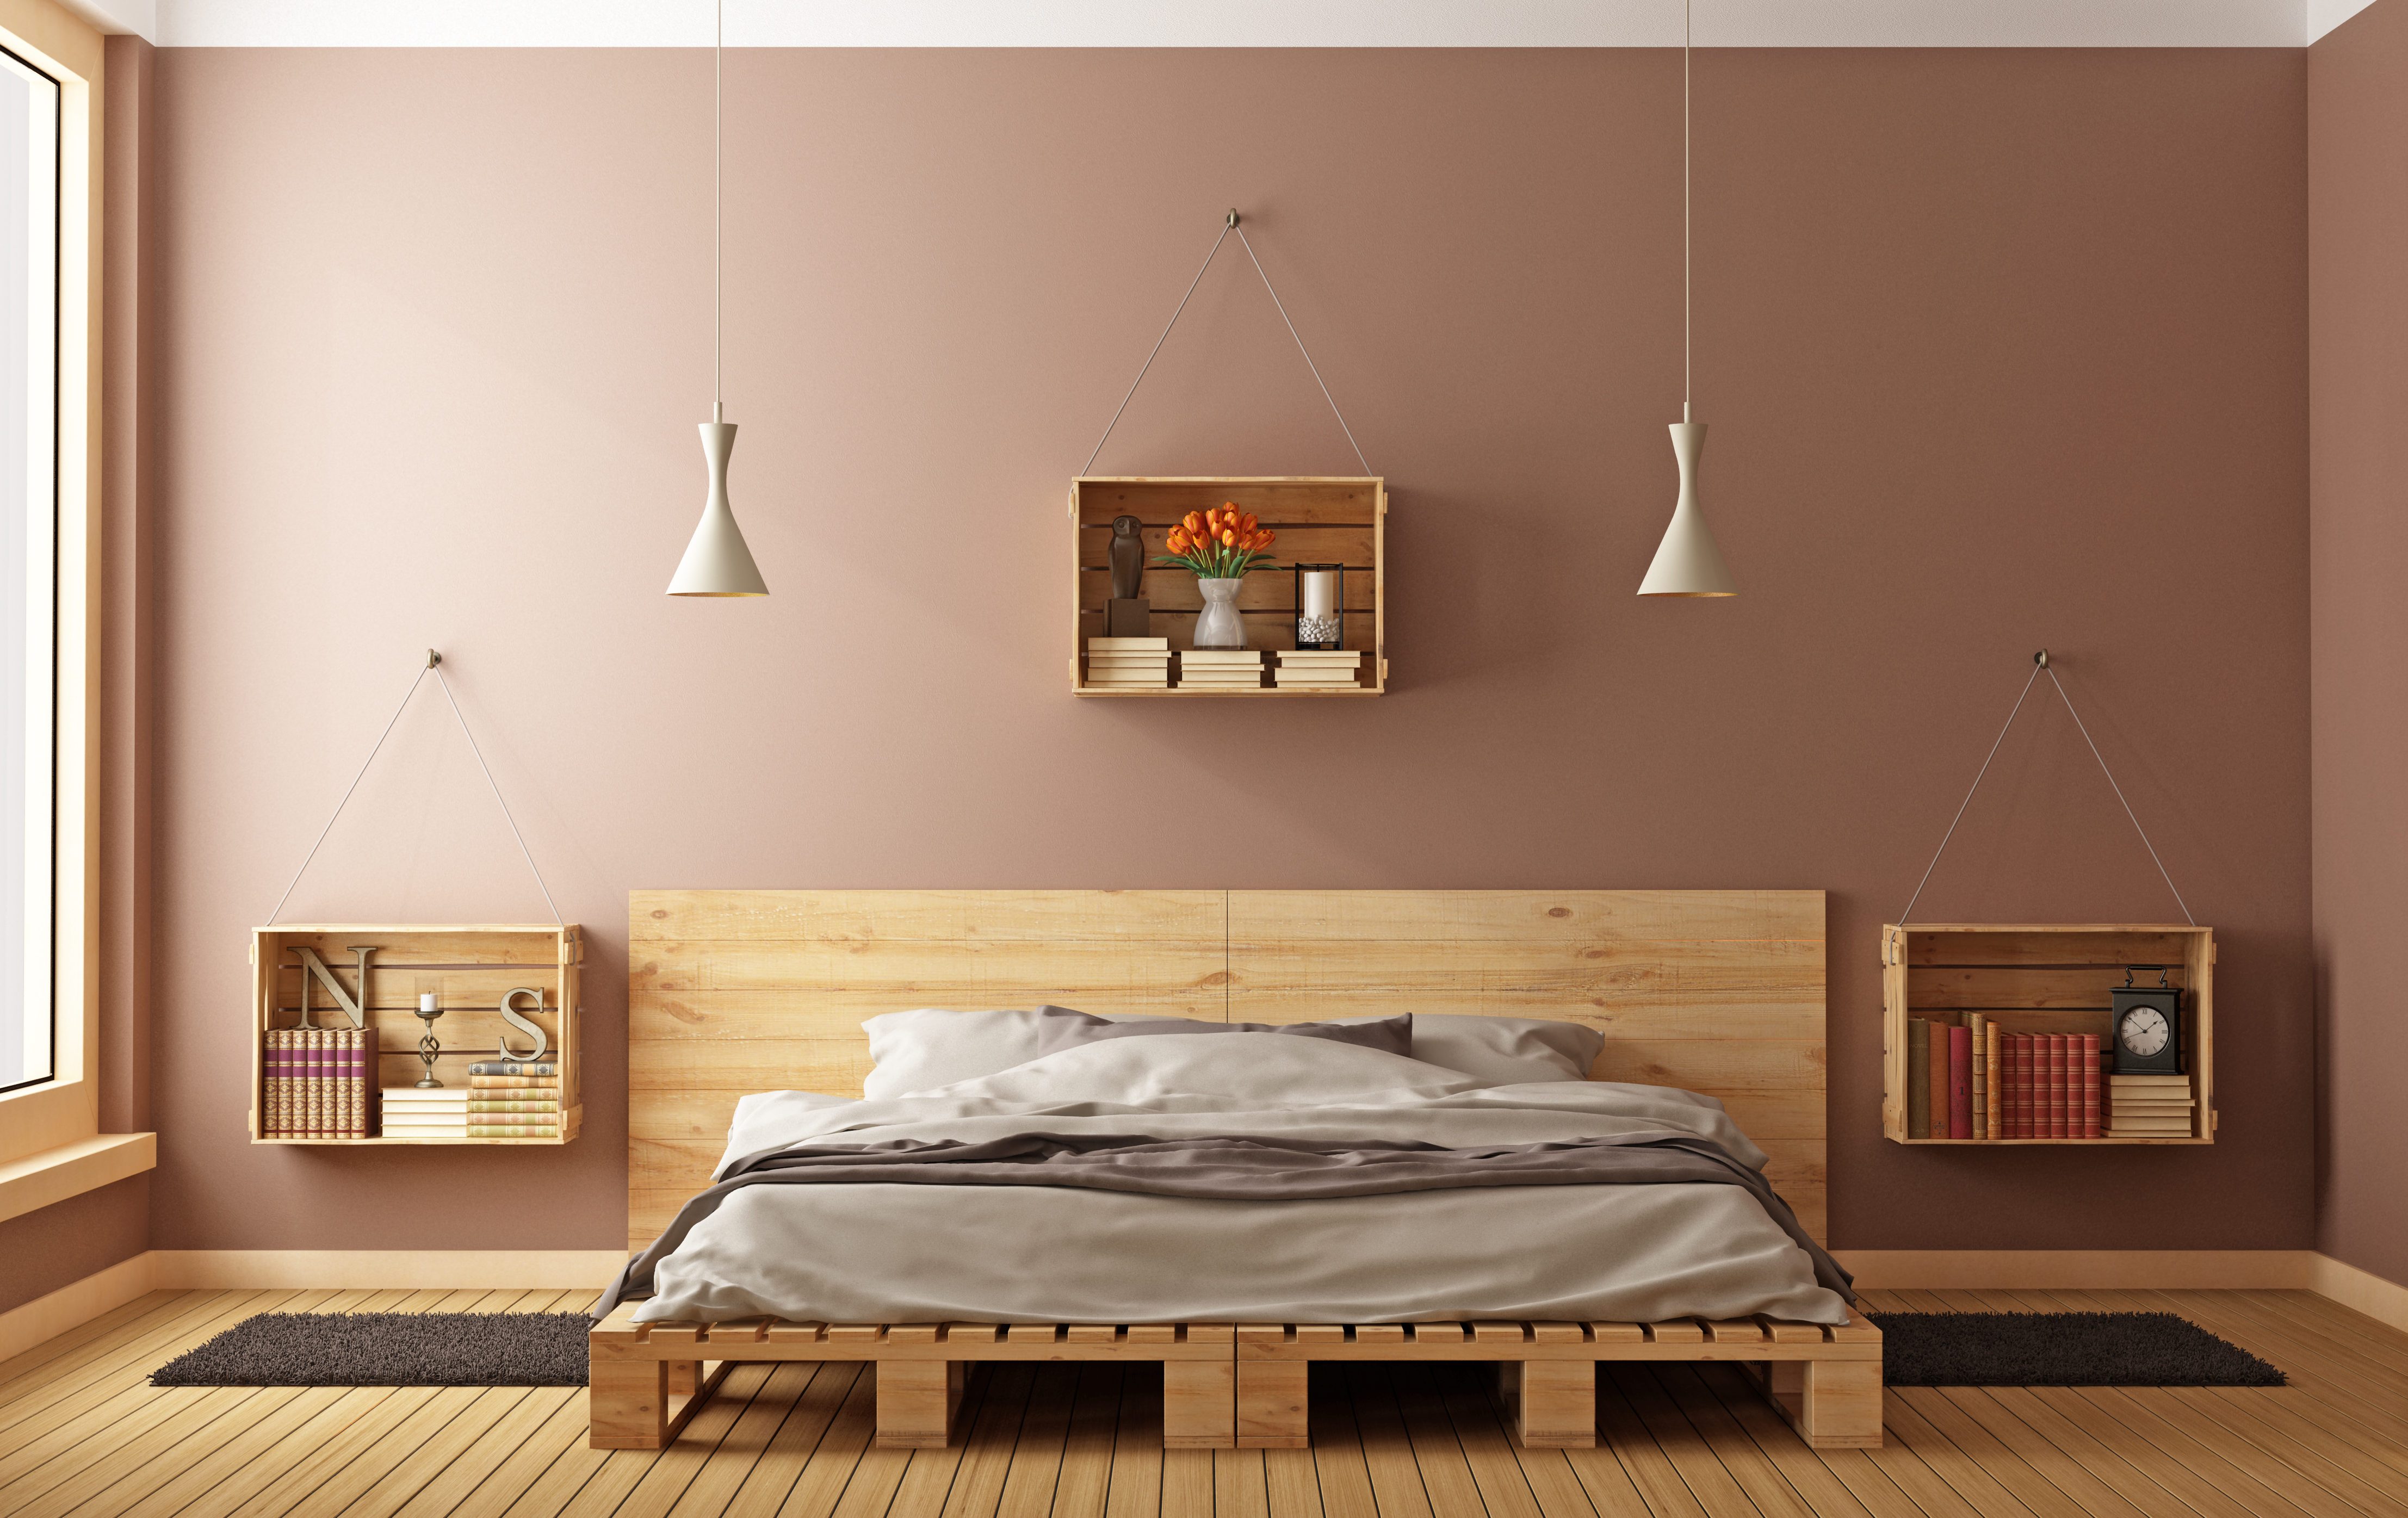 brown bedroom